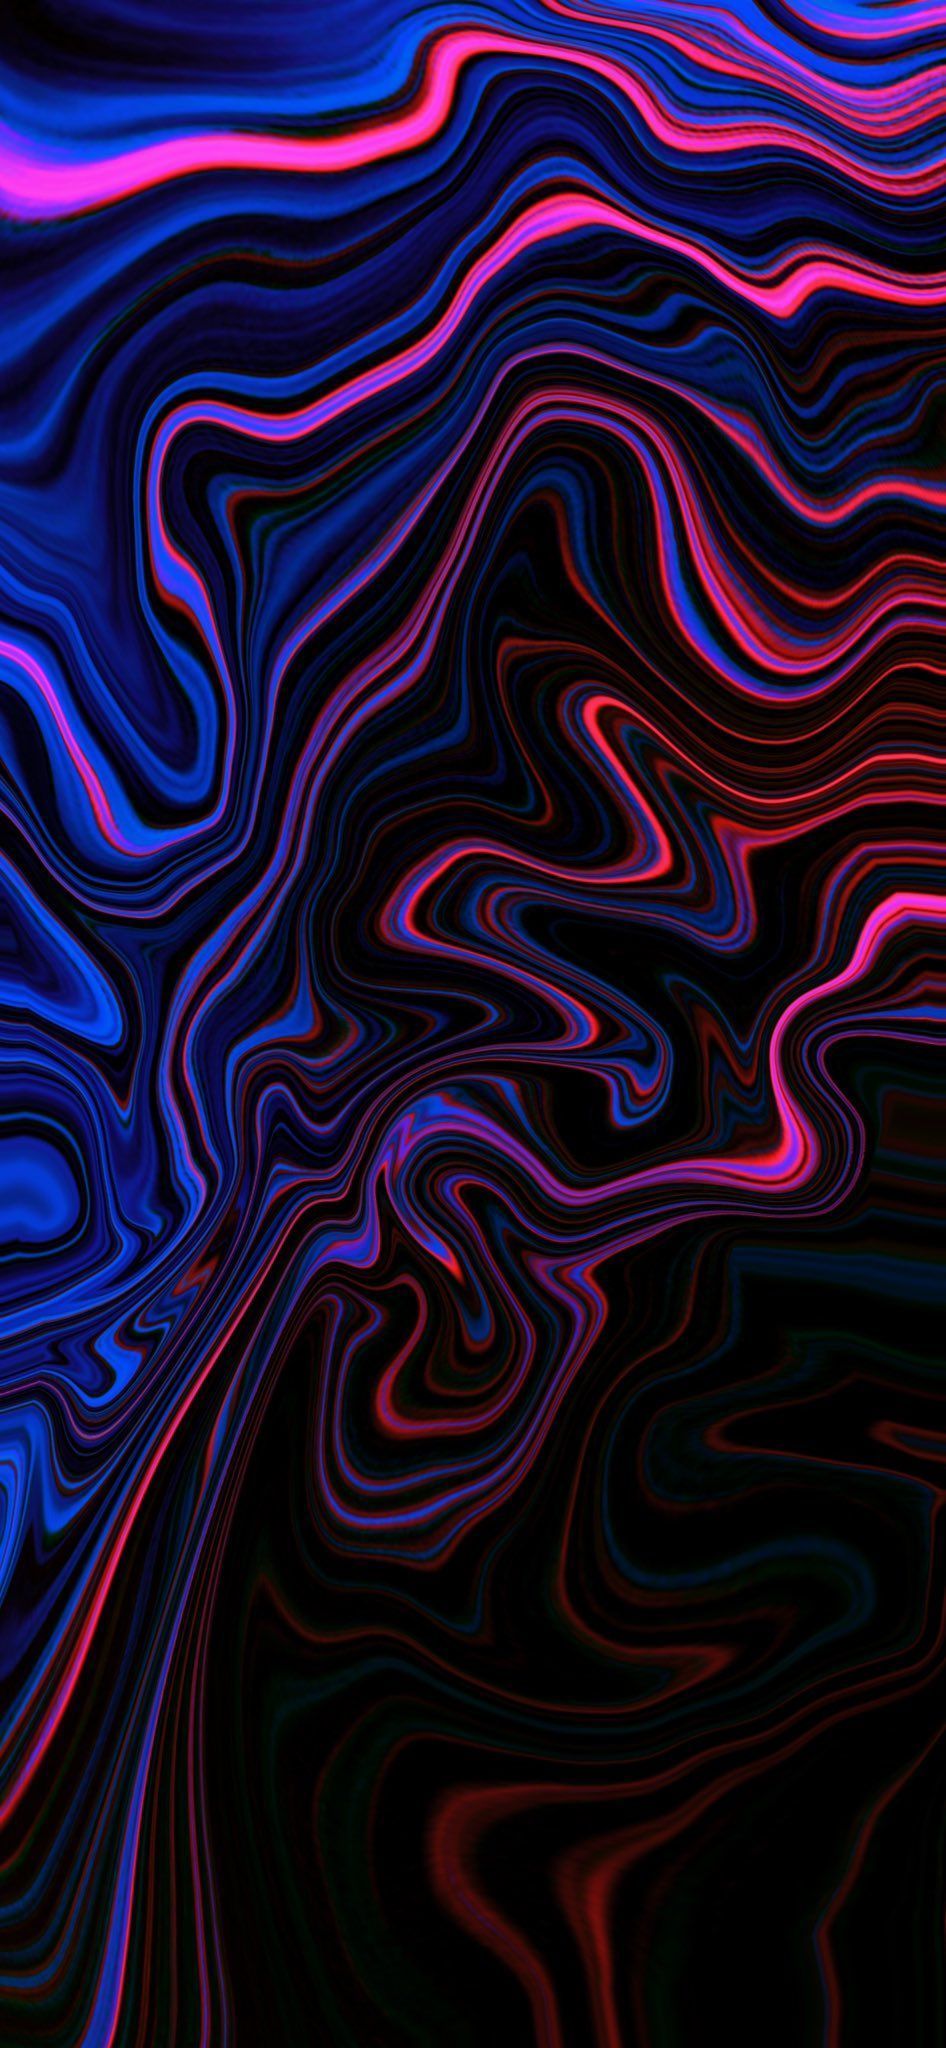 Neon Minimalist iPhone Wallpaper .wallpaperaccess.com